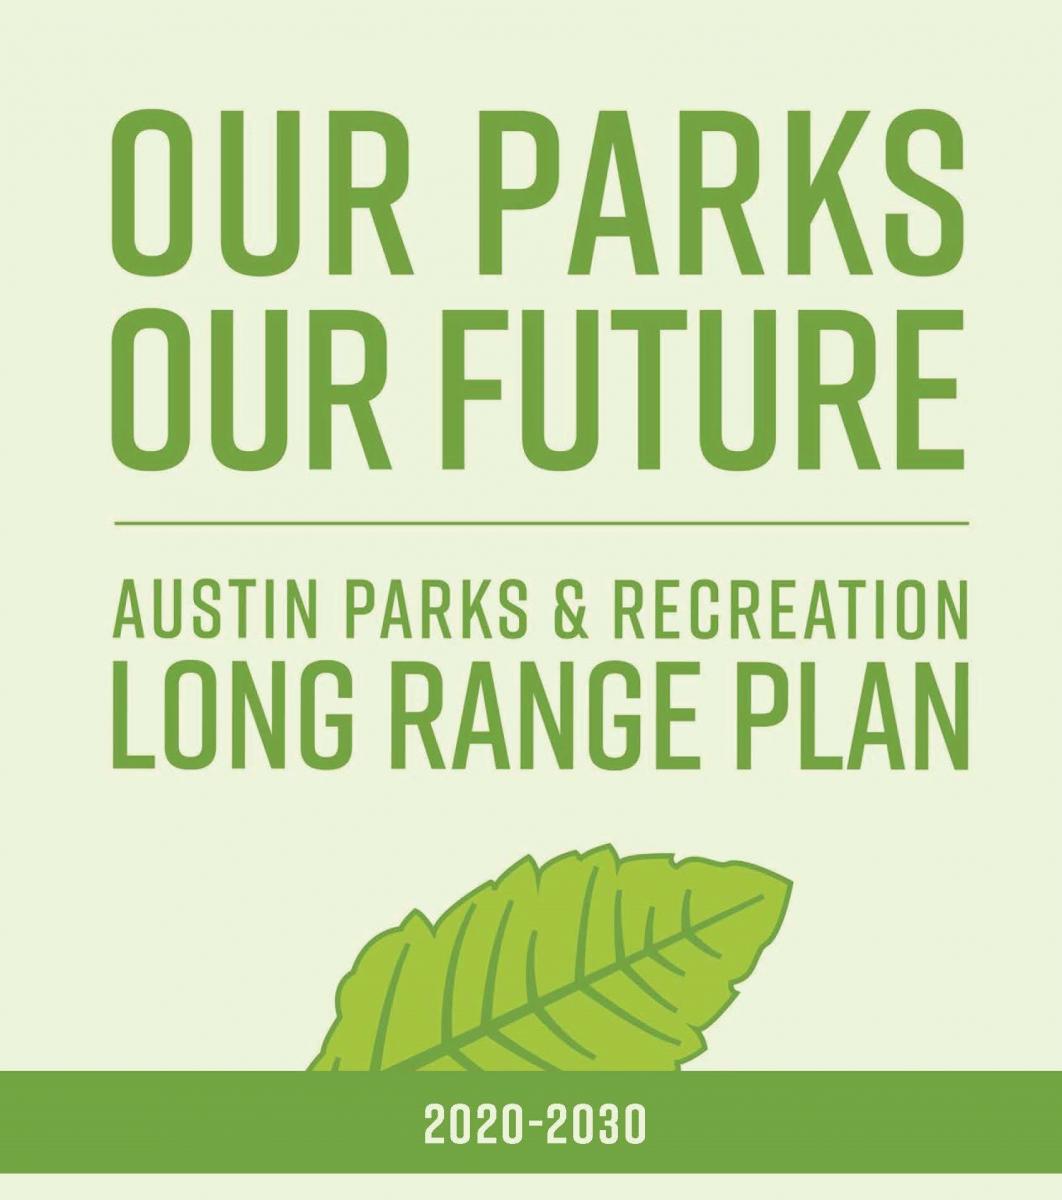 Our Parks, Our Future: Long Range Plan 2020-2030